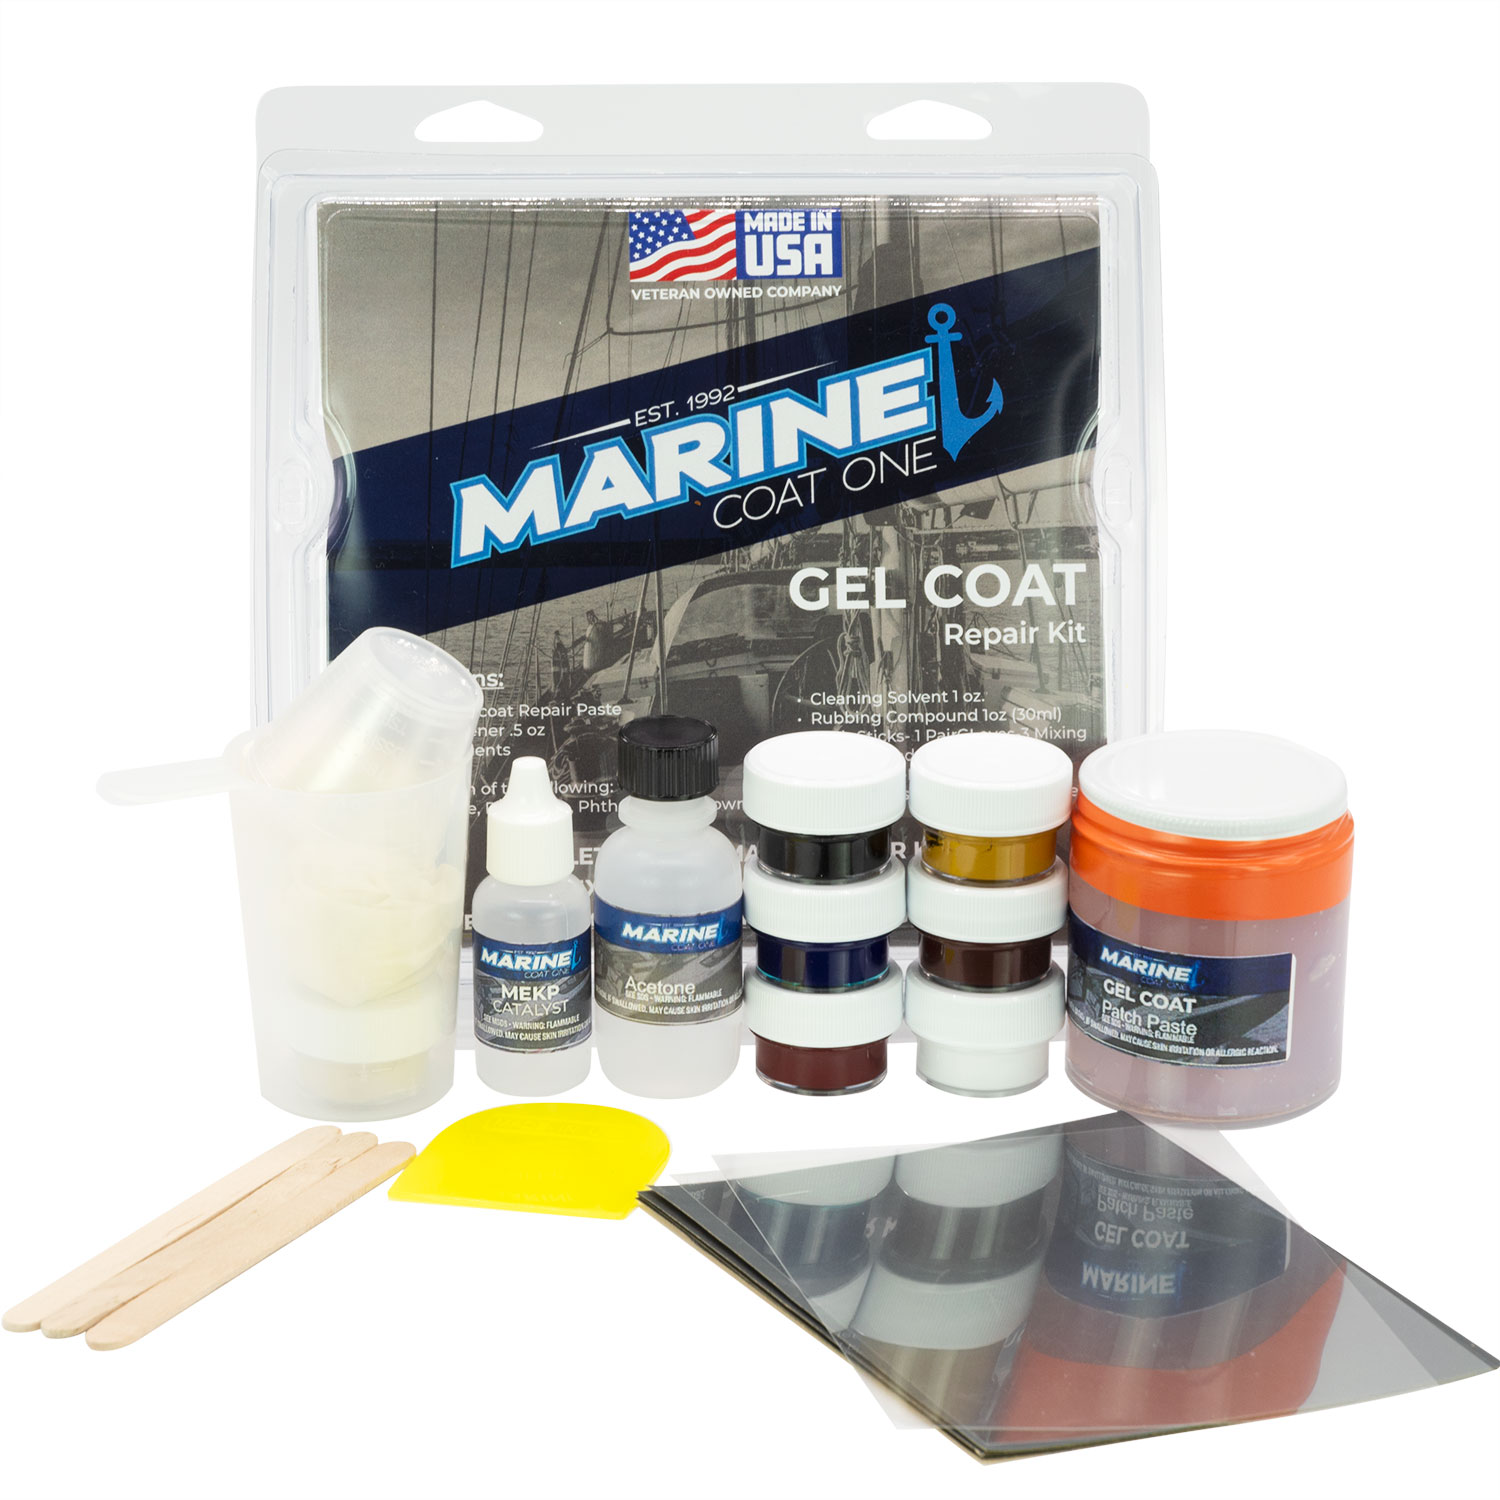 Marine Coat One, White Gelcoat Repair Kit for Boat, Fiberglass Gel Coat  Restoration (with MEKP Catalyst for Hardening, 1 Quart) 